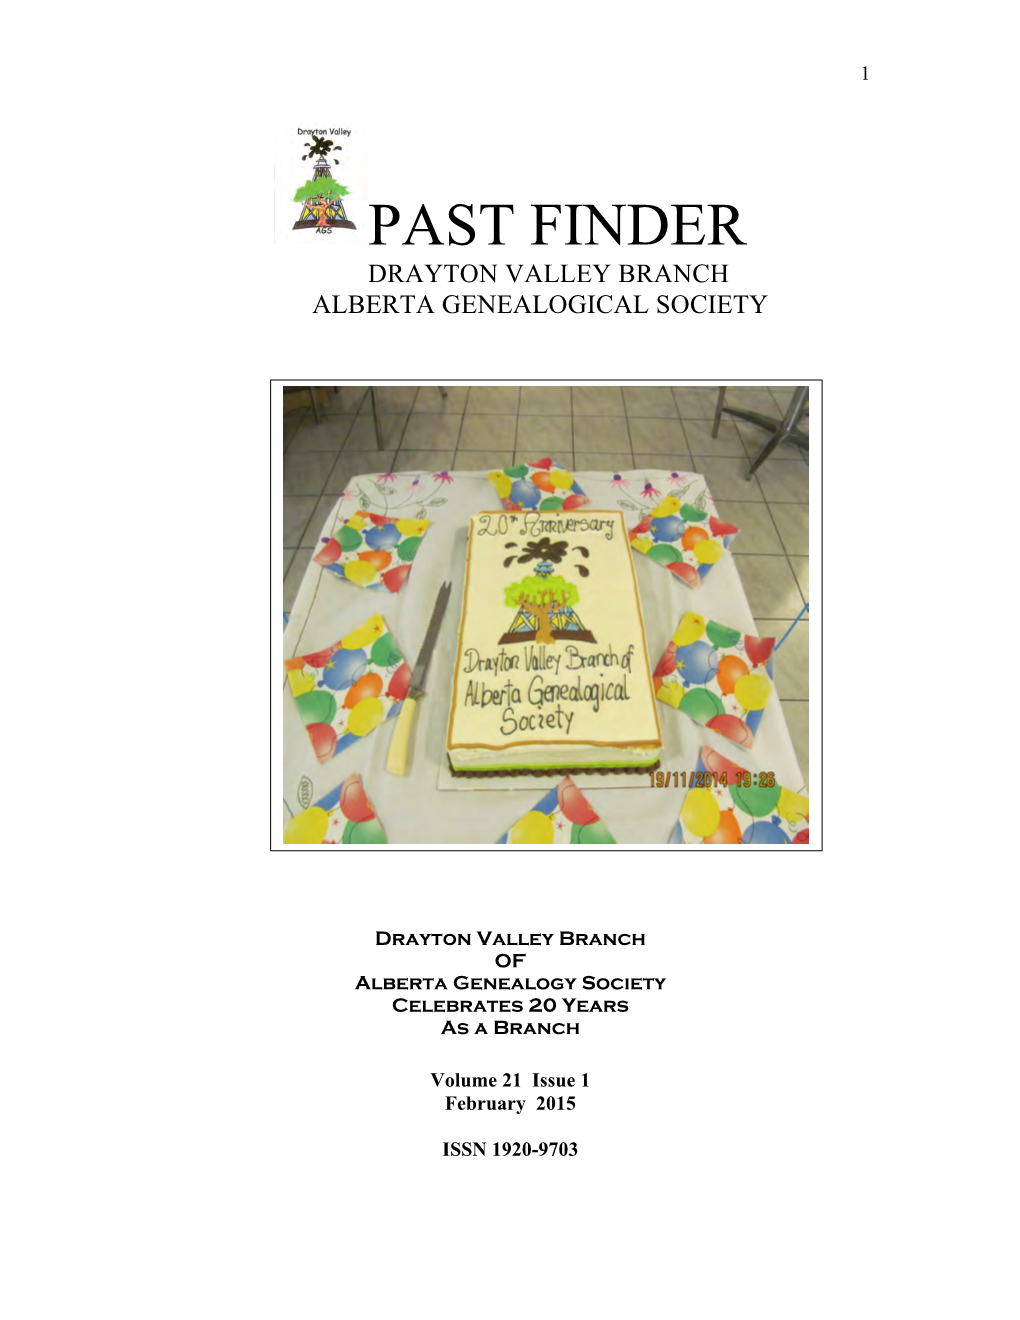 Past Finder Drayton Valley Branch Alberta Genealogical Society